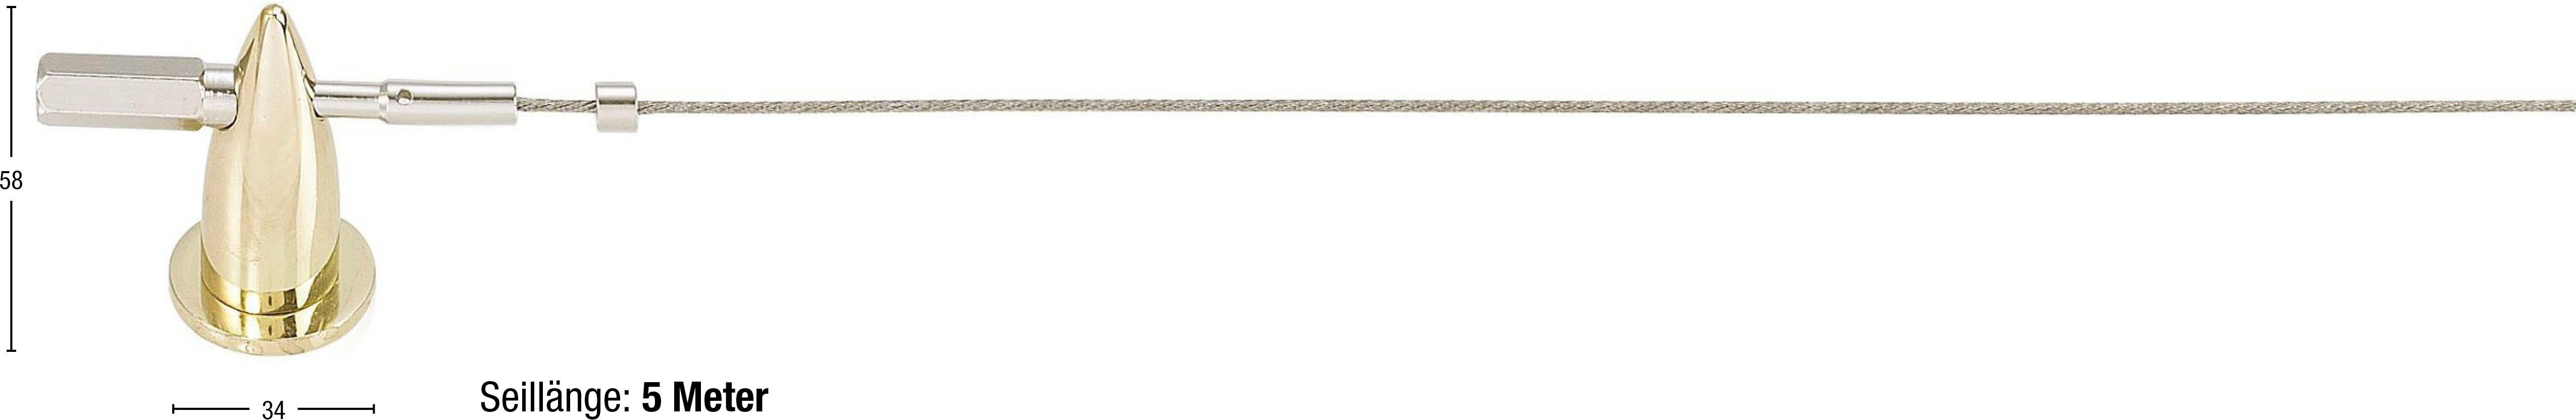 Seilspanngarnitur "STRANG", Seil GARESA, 2 mm, Wandmontage Seilspanngarnitur